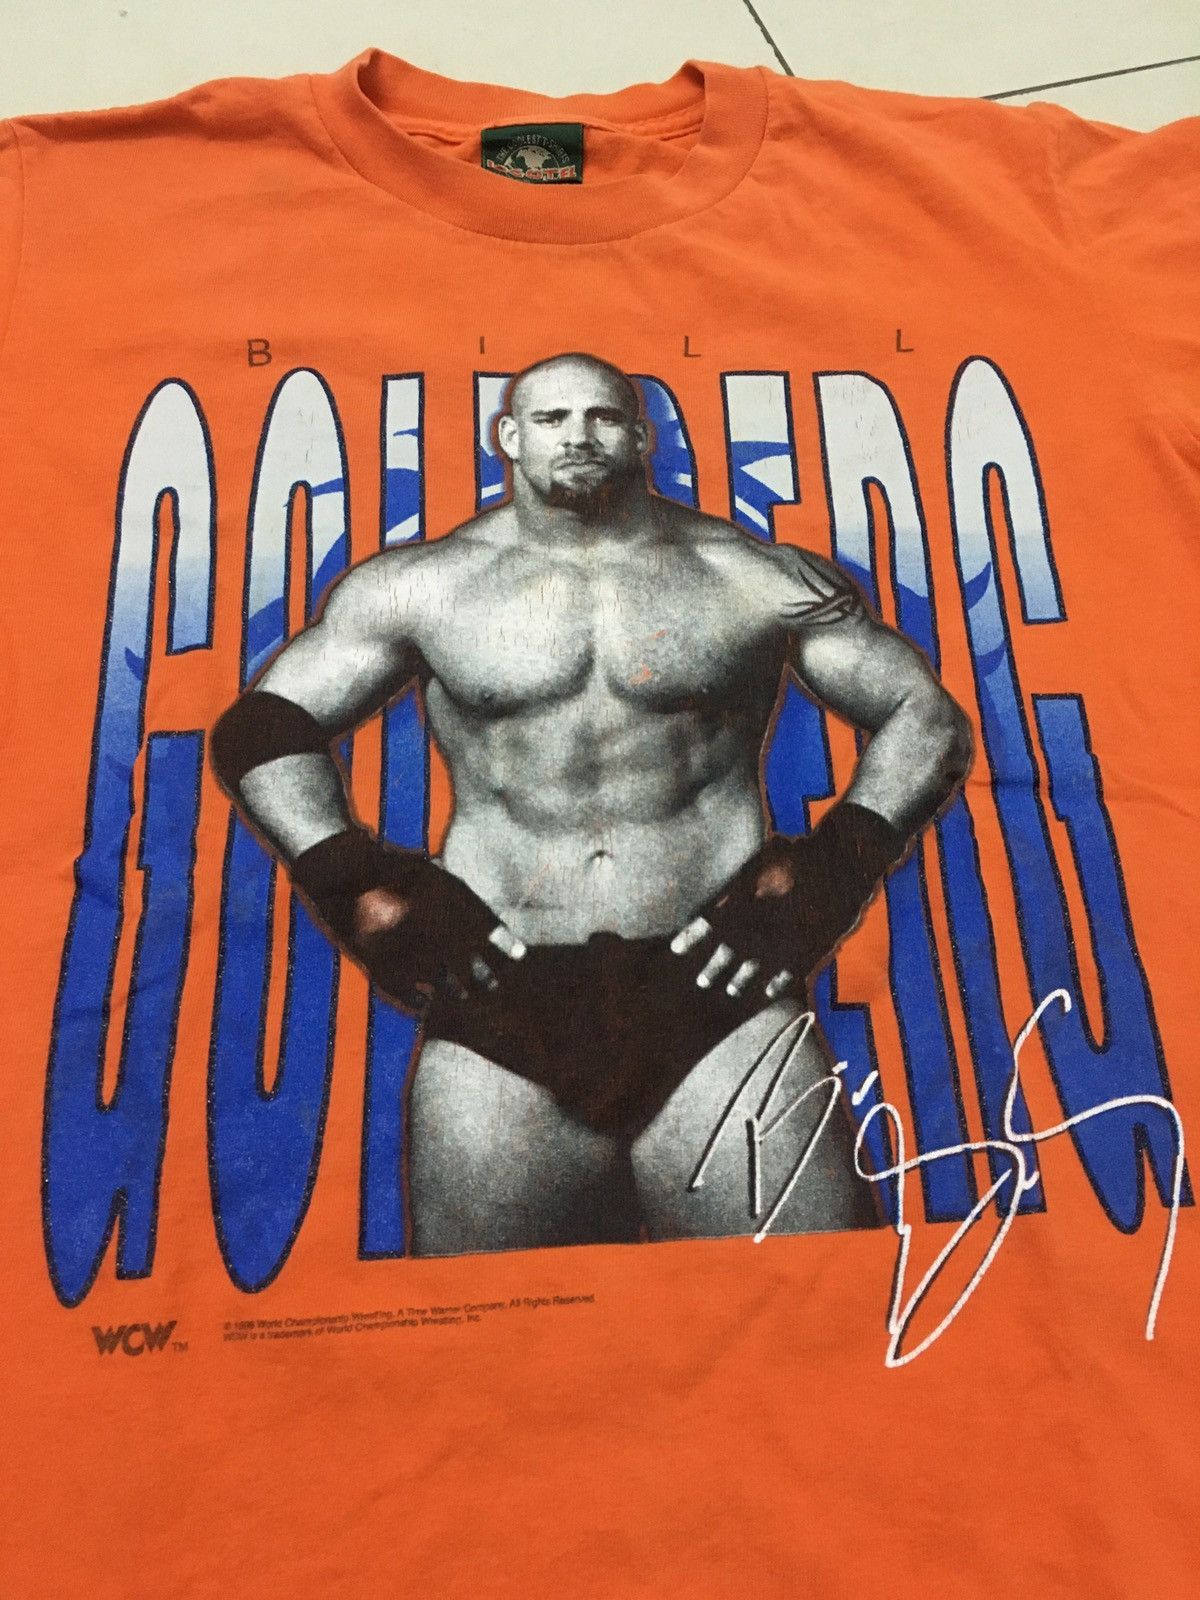 Vintage Vintage 1998 Wrestling Goldberg Wcw Wwf Wwe Tshirt Orange M Size US M / EU 48-50 / 2 - 3 Thumbnail